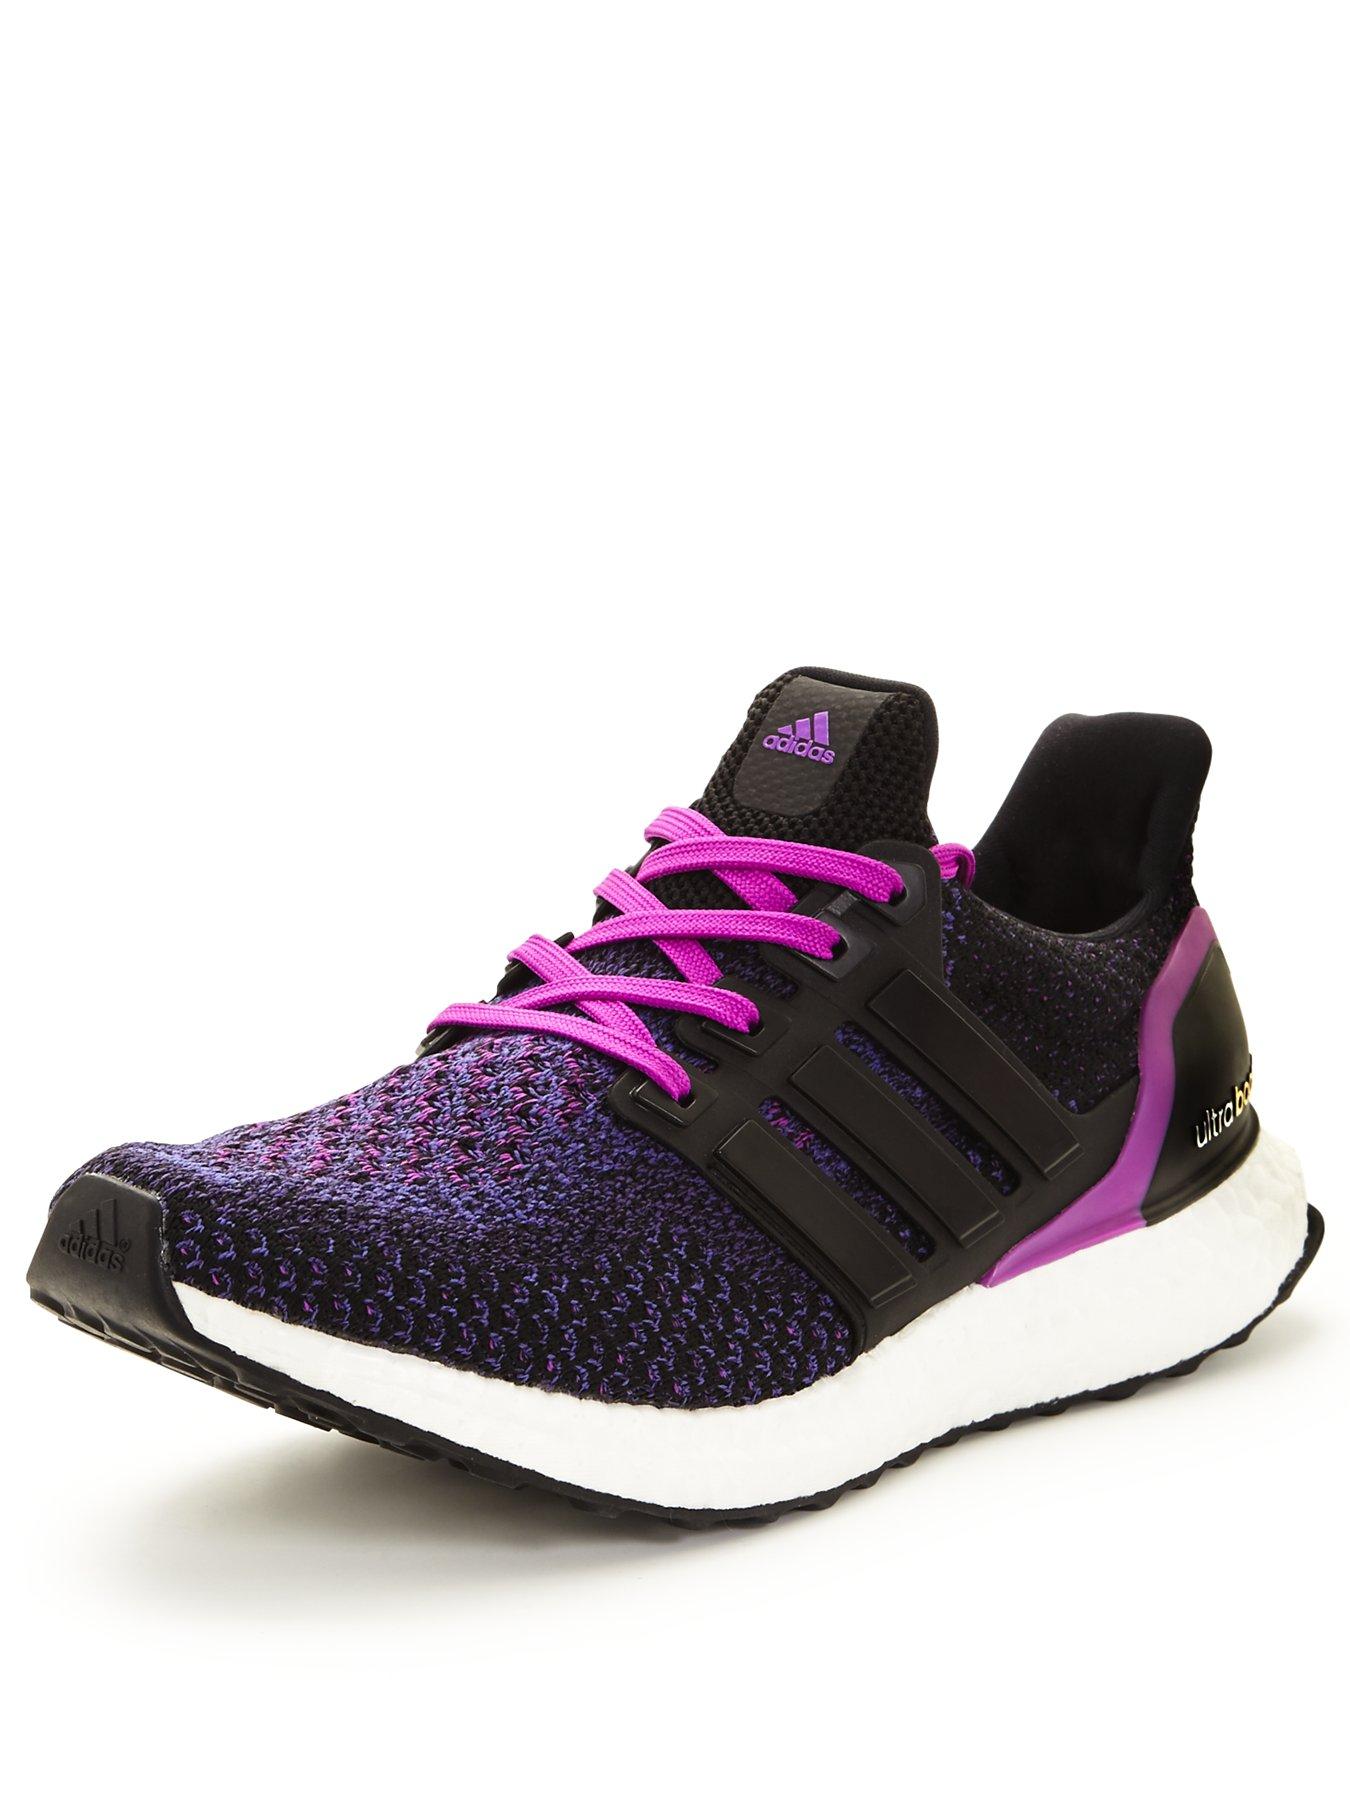 adidas Ultra Boost Running Shoe - Black/Purple | very.co.uk